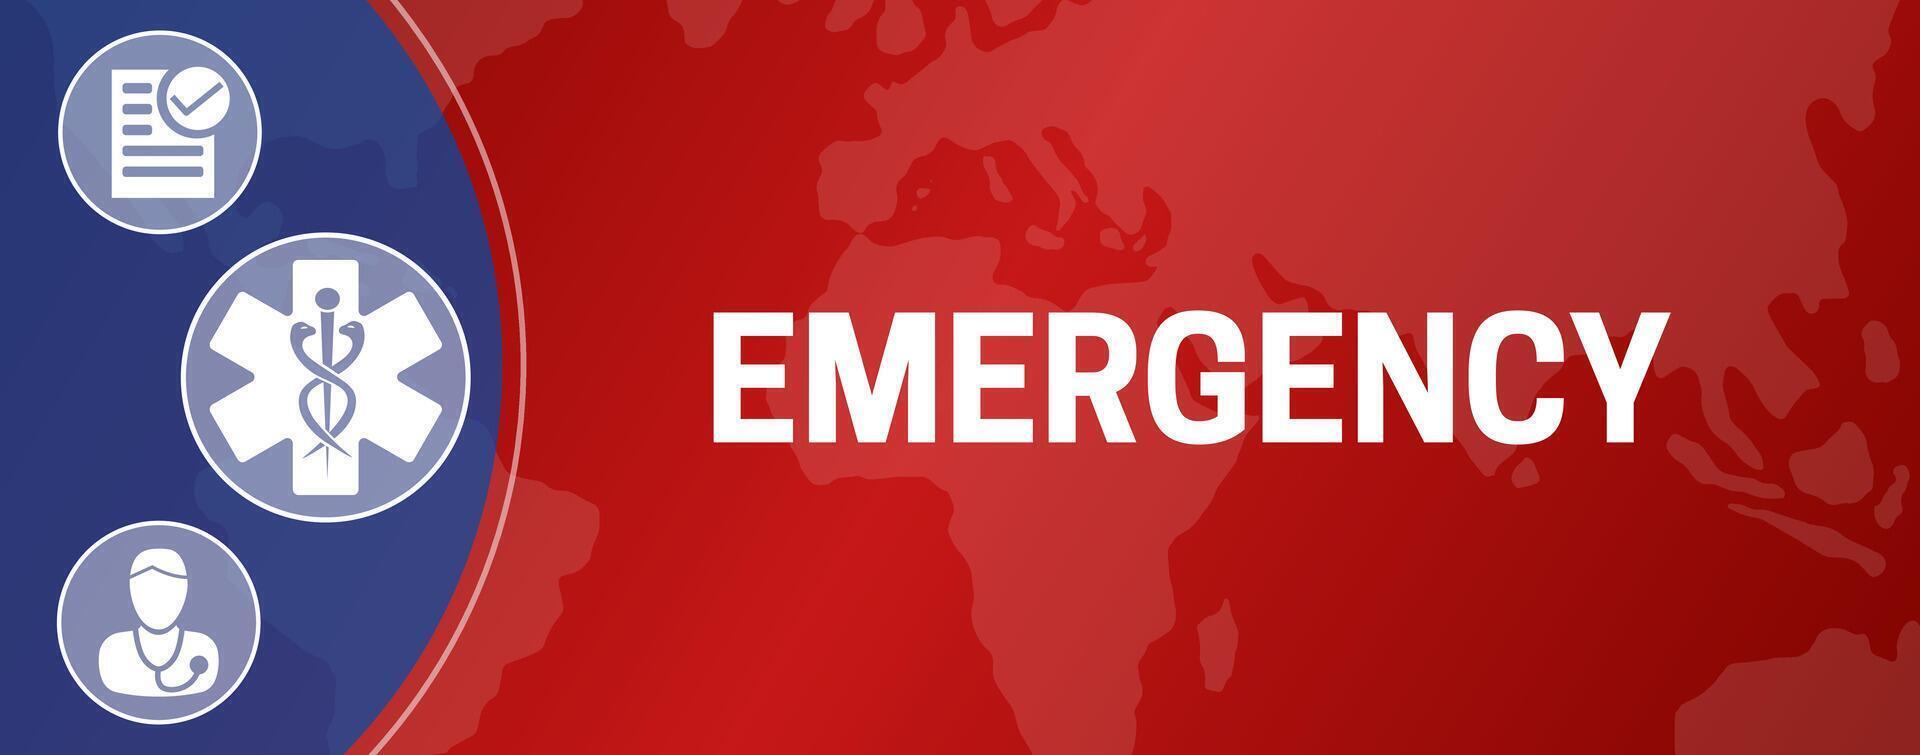 Emergency Blue and Red Illustration Background Banner Design vector